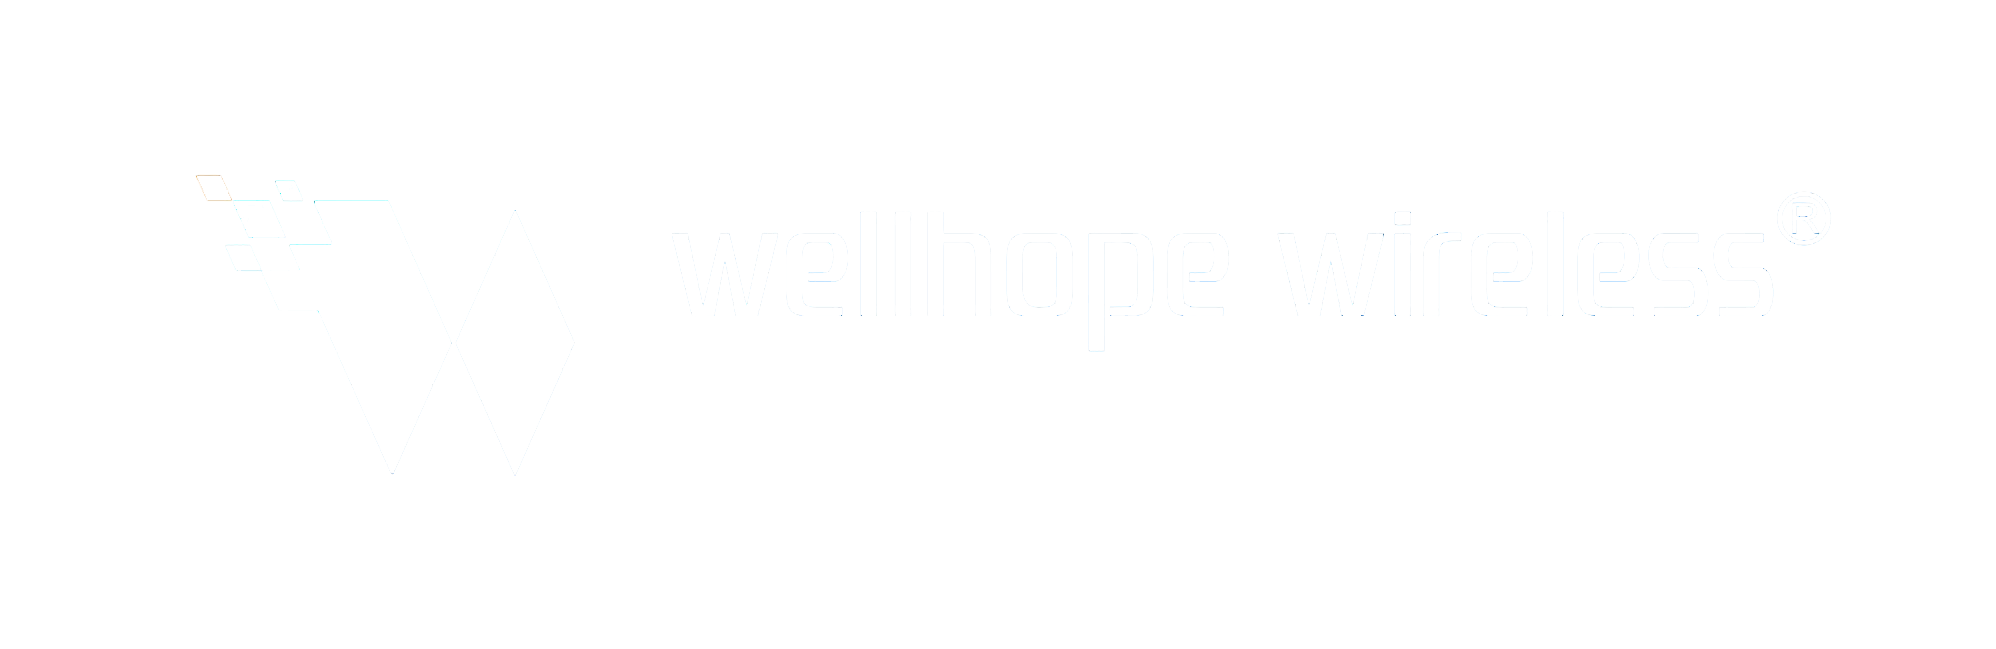 Wellhope Communication Equipment Limited